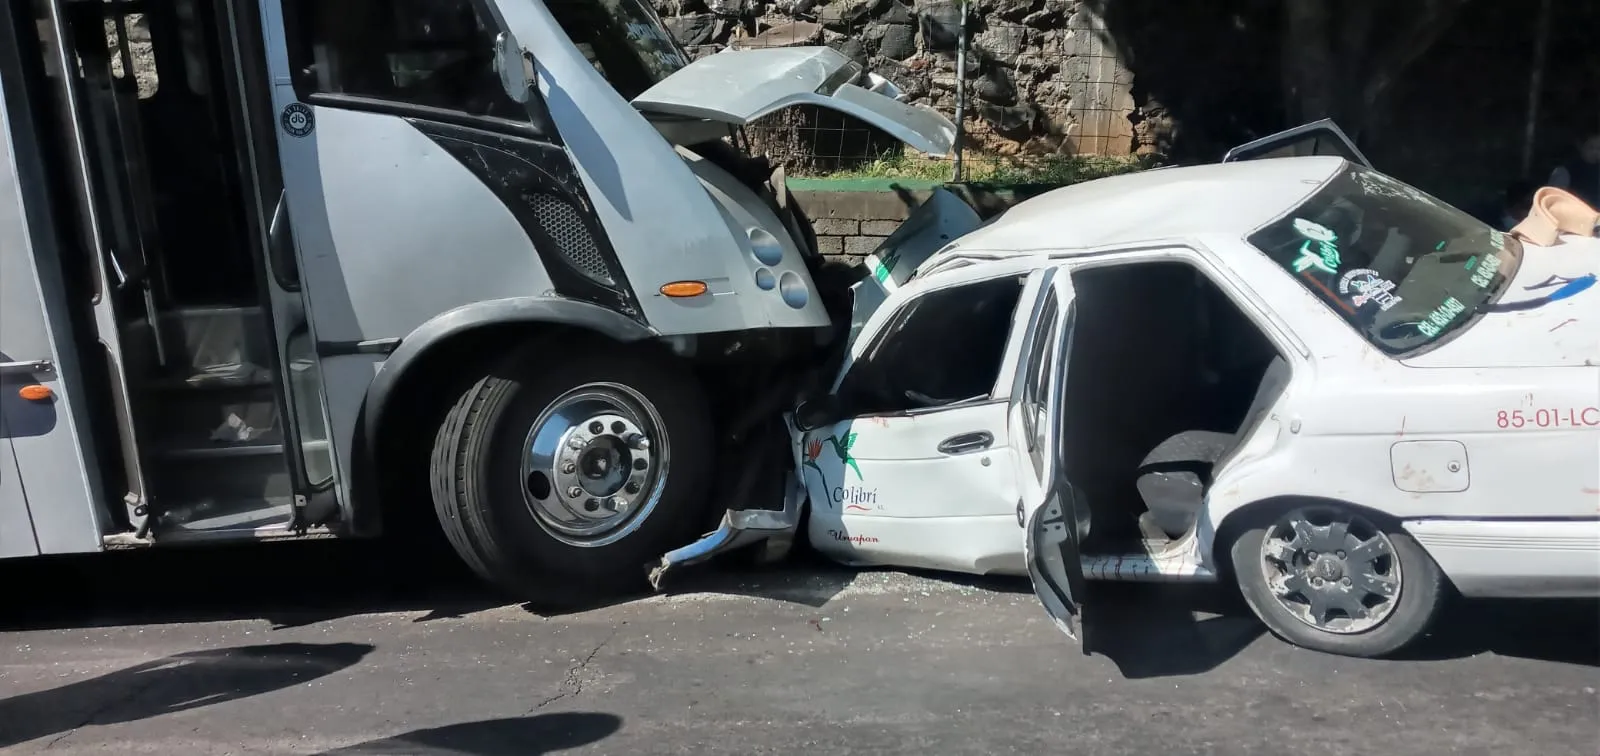 Suman al menos 5 lesionados tras choque vehicular en Uruapan